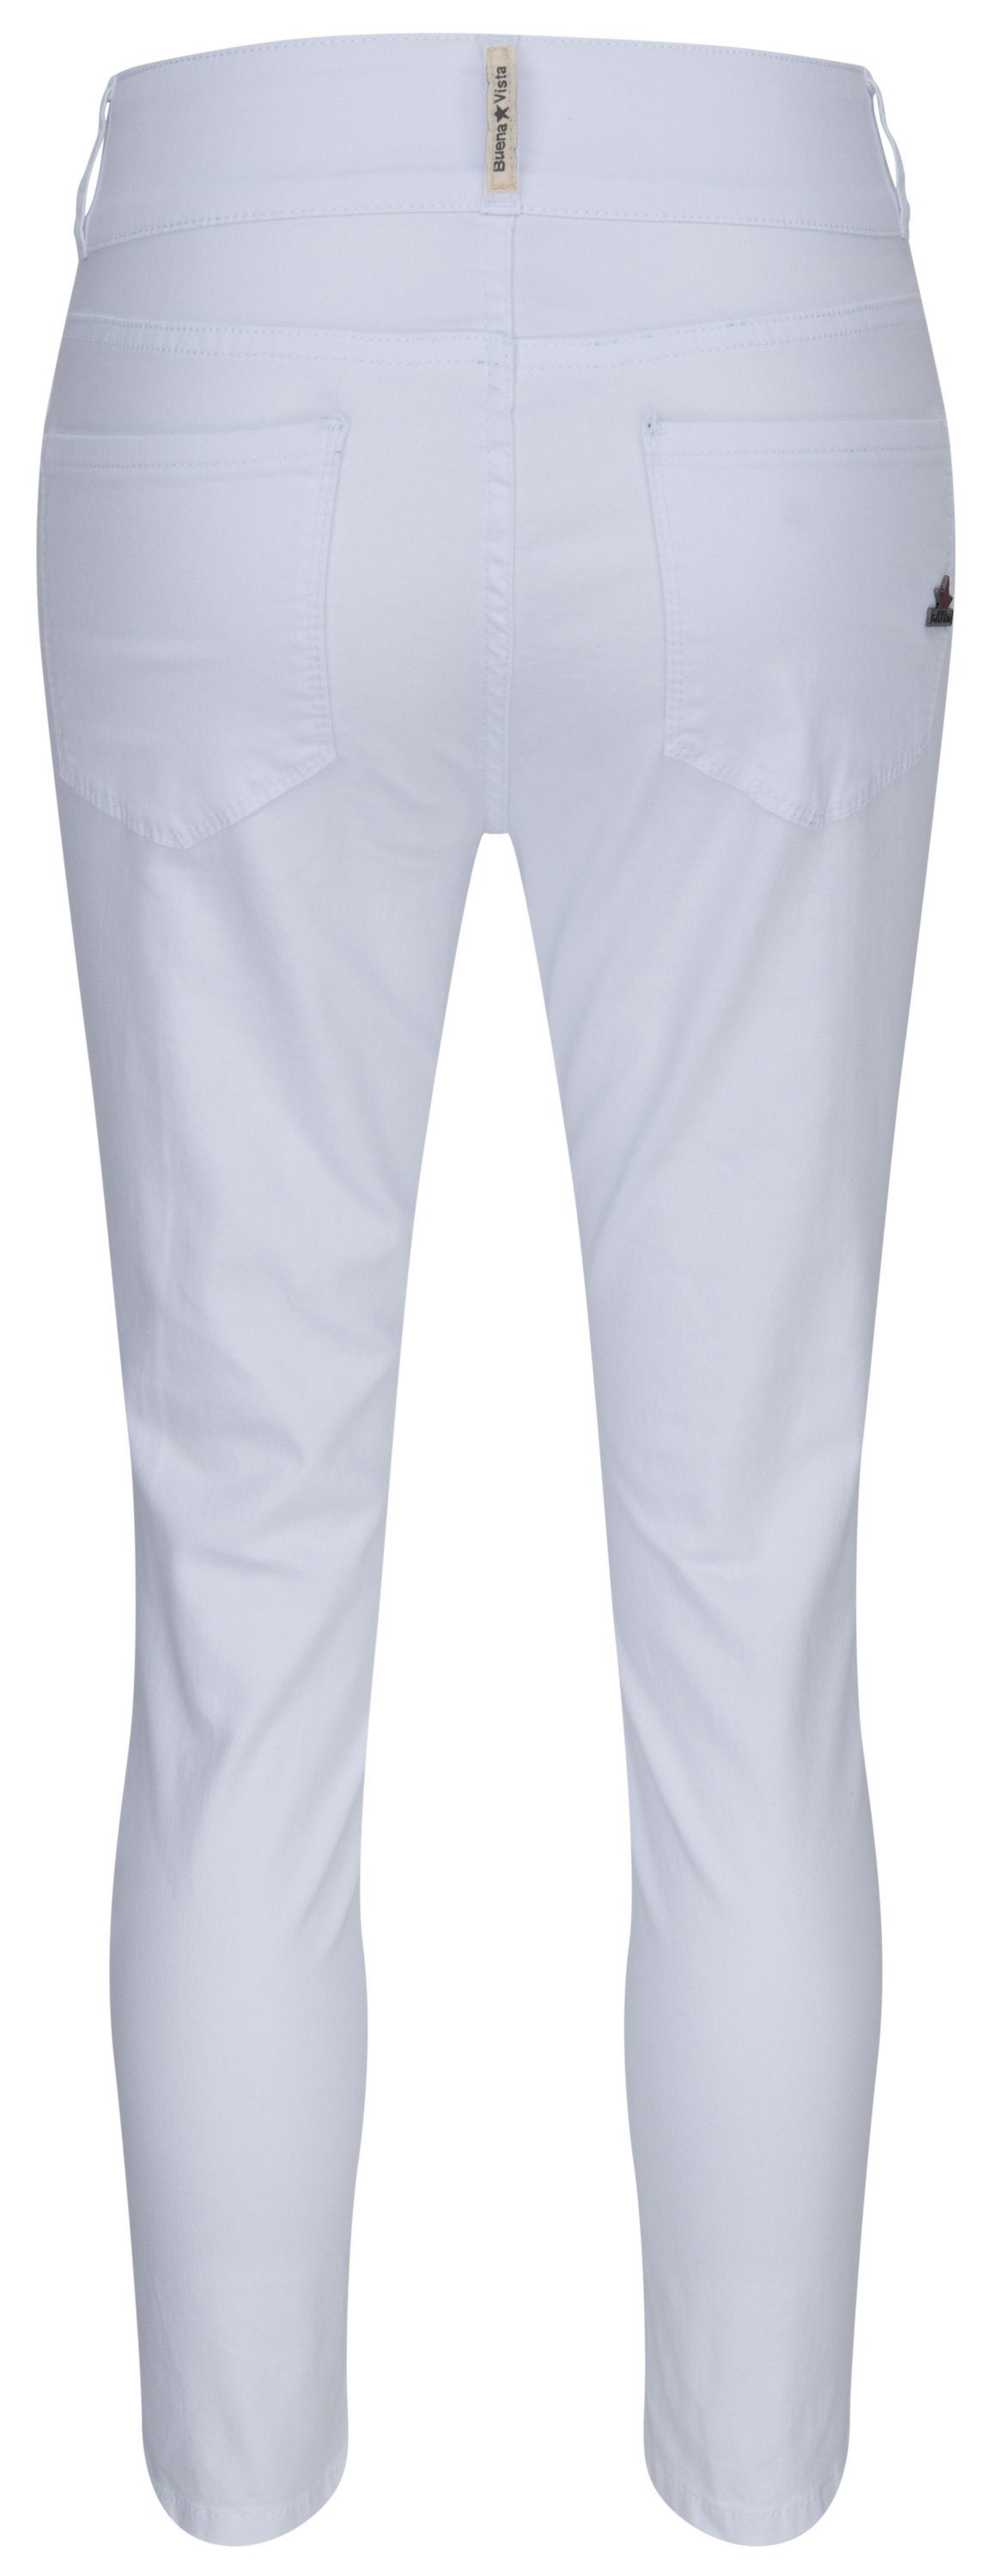 J5658 white Vista Buena BUENA Stretch Stretch-Jeans VISTA - 502.032 2104 TUMMYLESS Twill 7/8